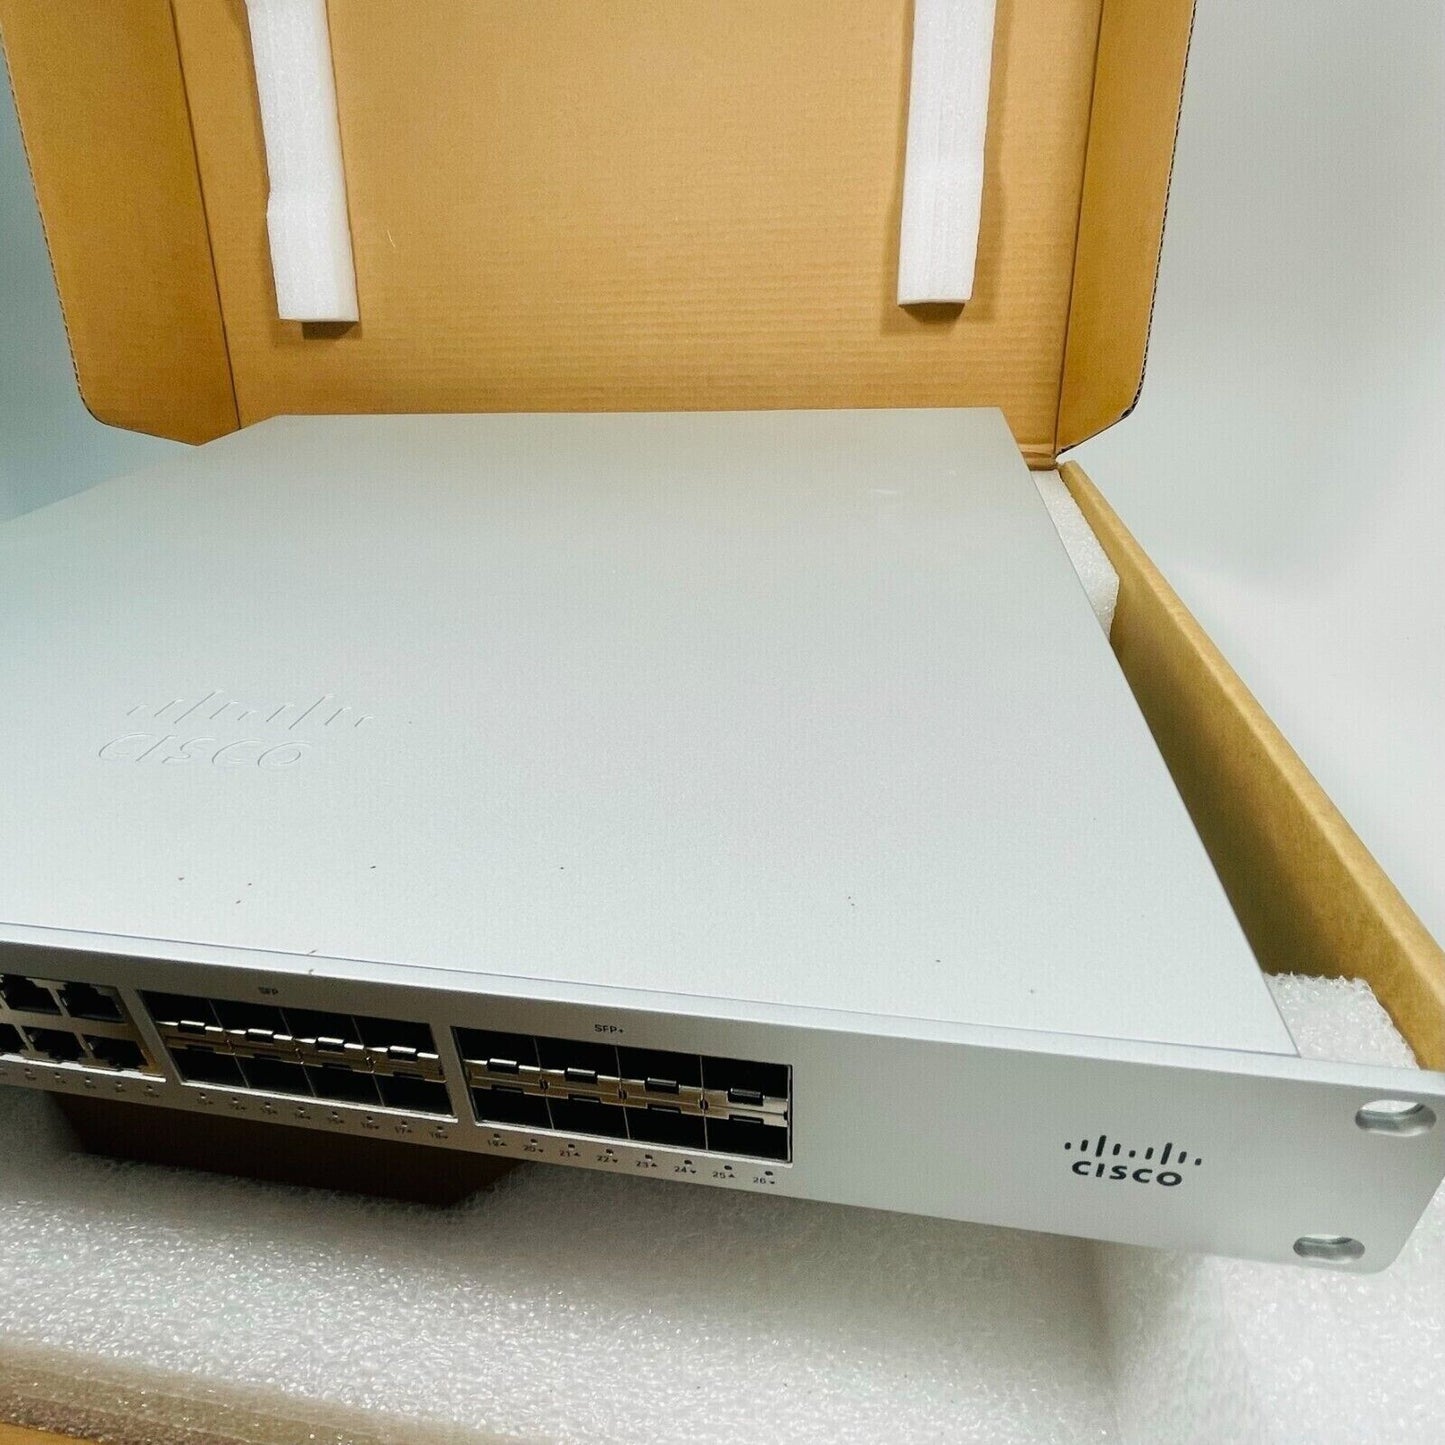 NEW Cisco Meraki MX250-HW UNCLAIMED MX250 Cloud Managed Security Appliance